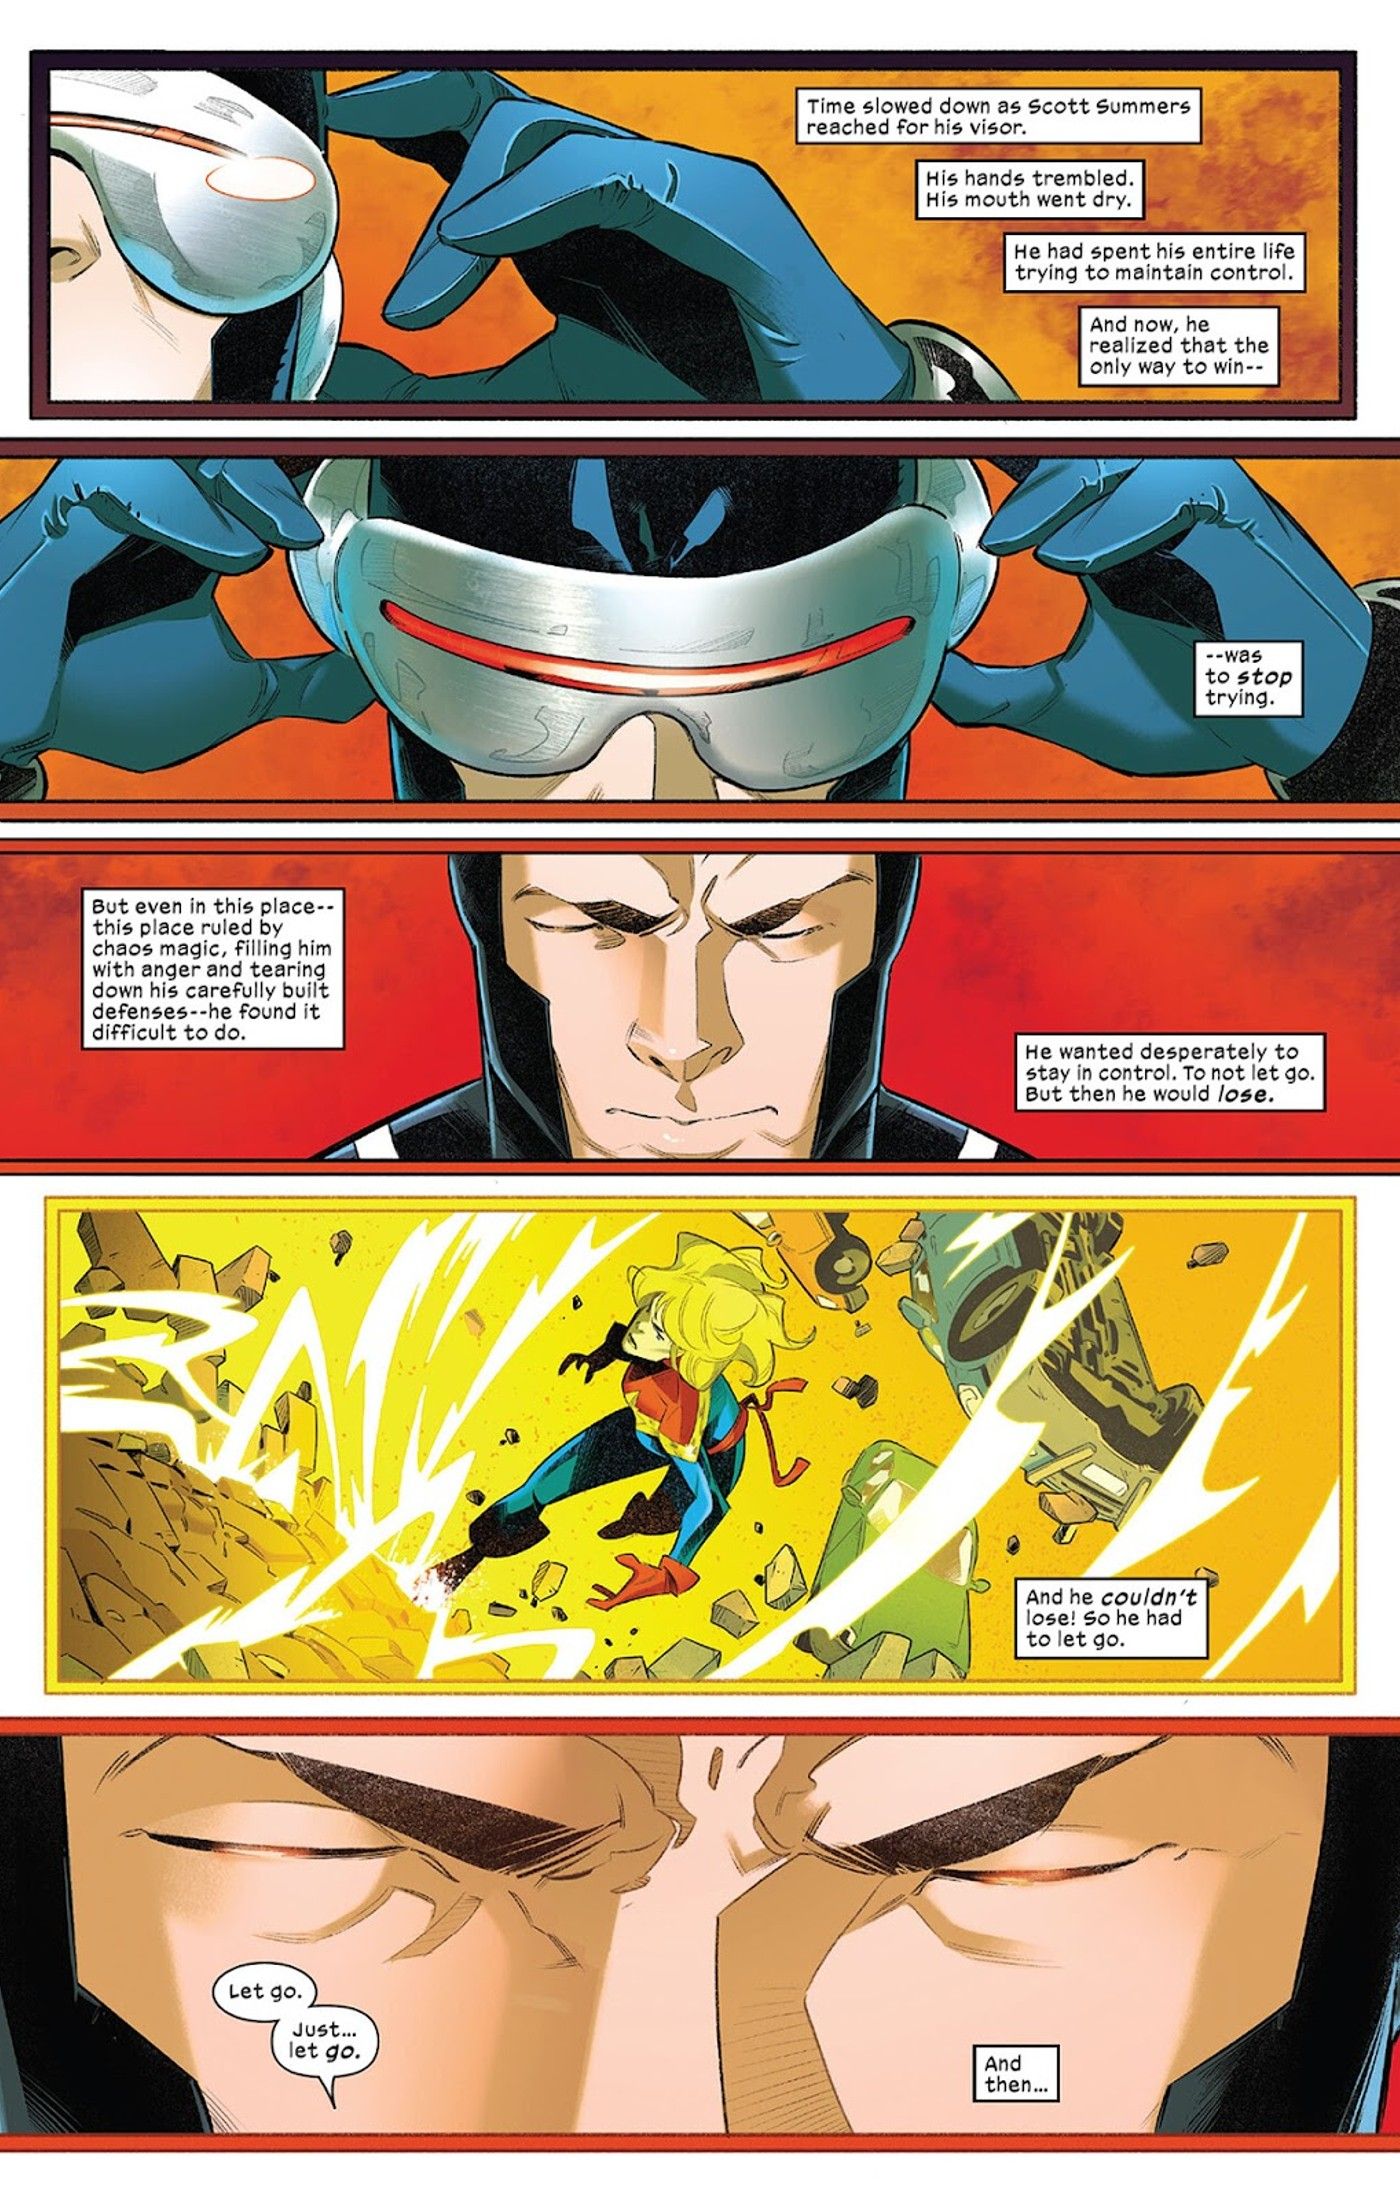 Cyclops lets go vs Captain Marvel-1